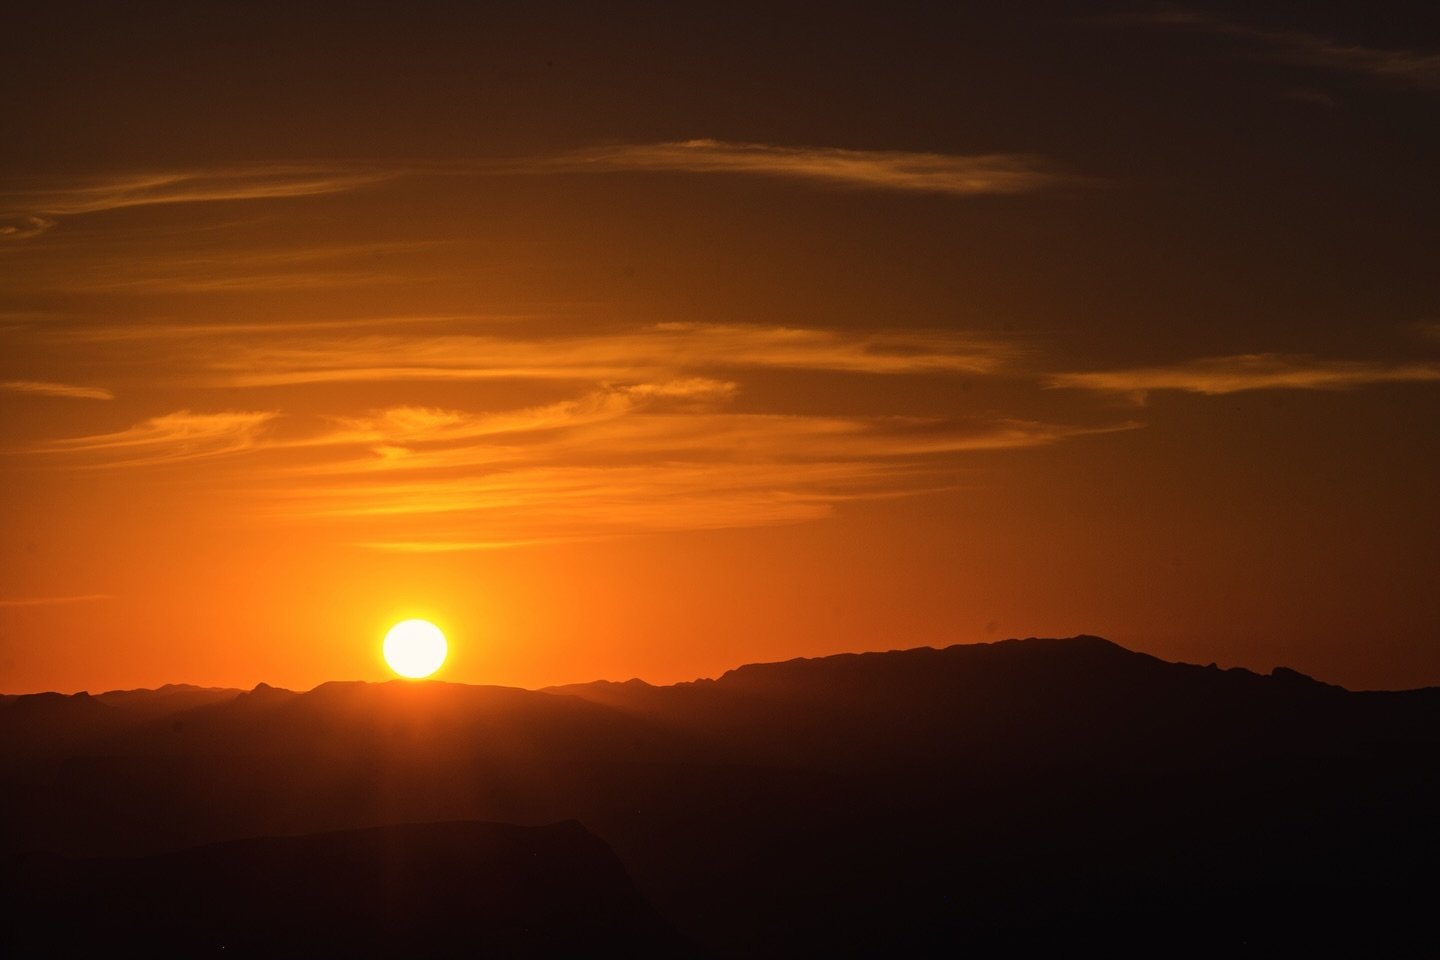 Texas skies&hellip; 😎🤩😍

#sunset #texas #sundowner #sunsetphotography #landscapelovers #chihuahuandesert #orangesky